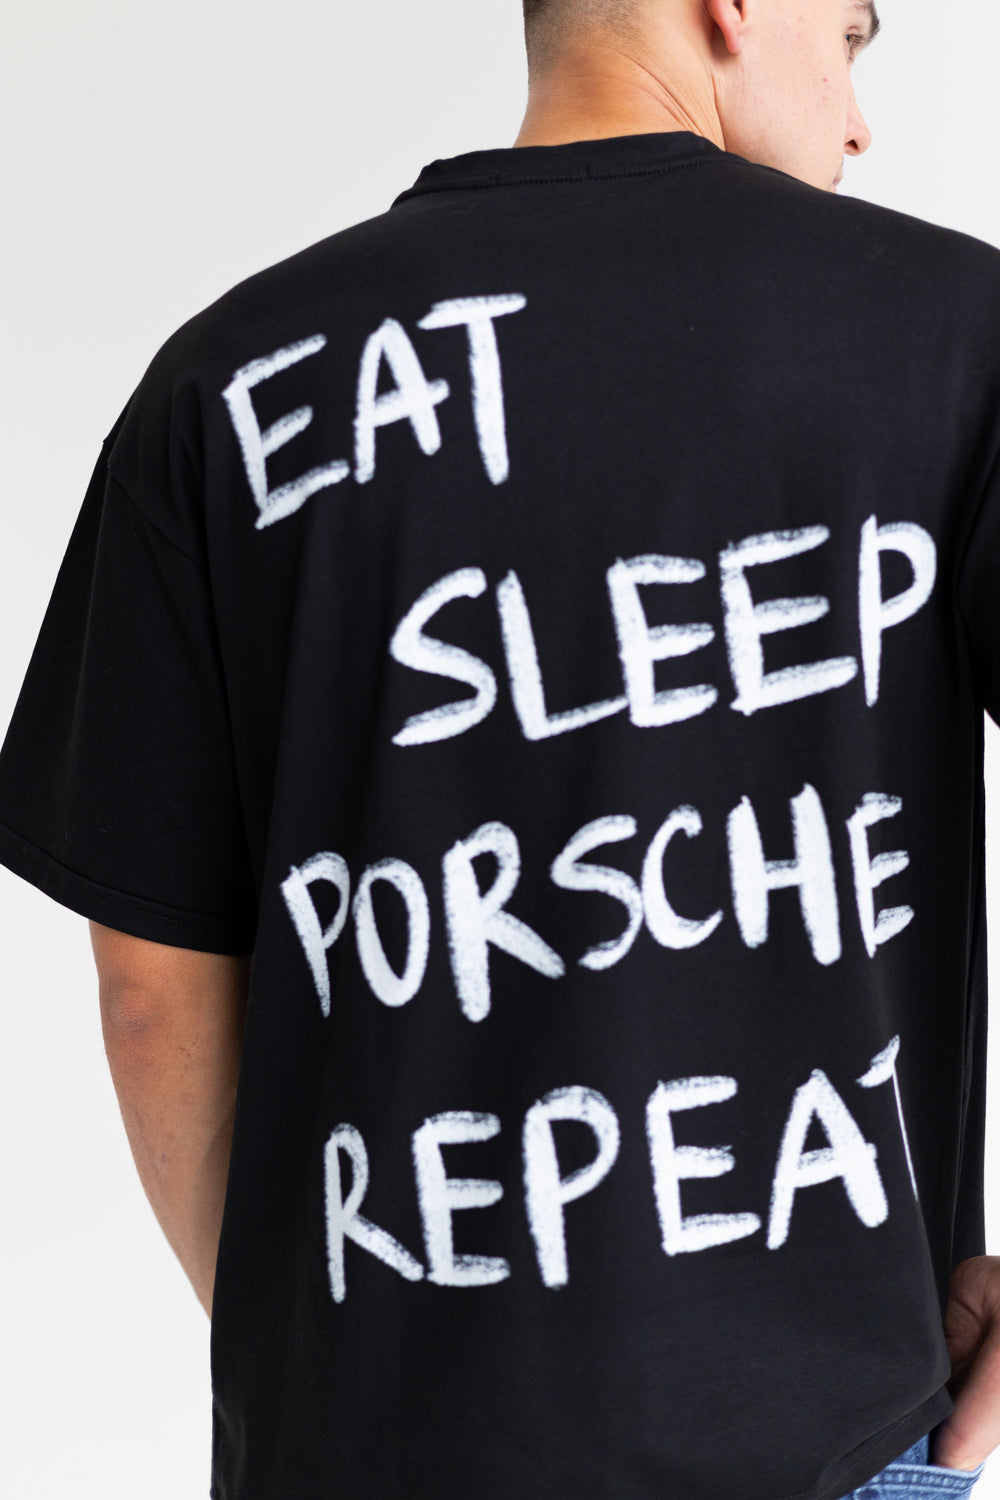 T-shirt Black Porsche Morning Star - Morning Star